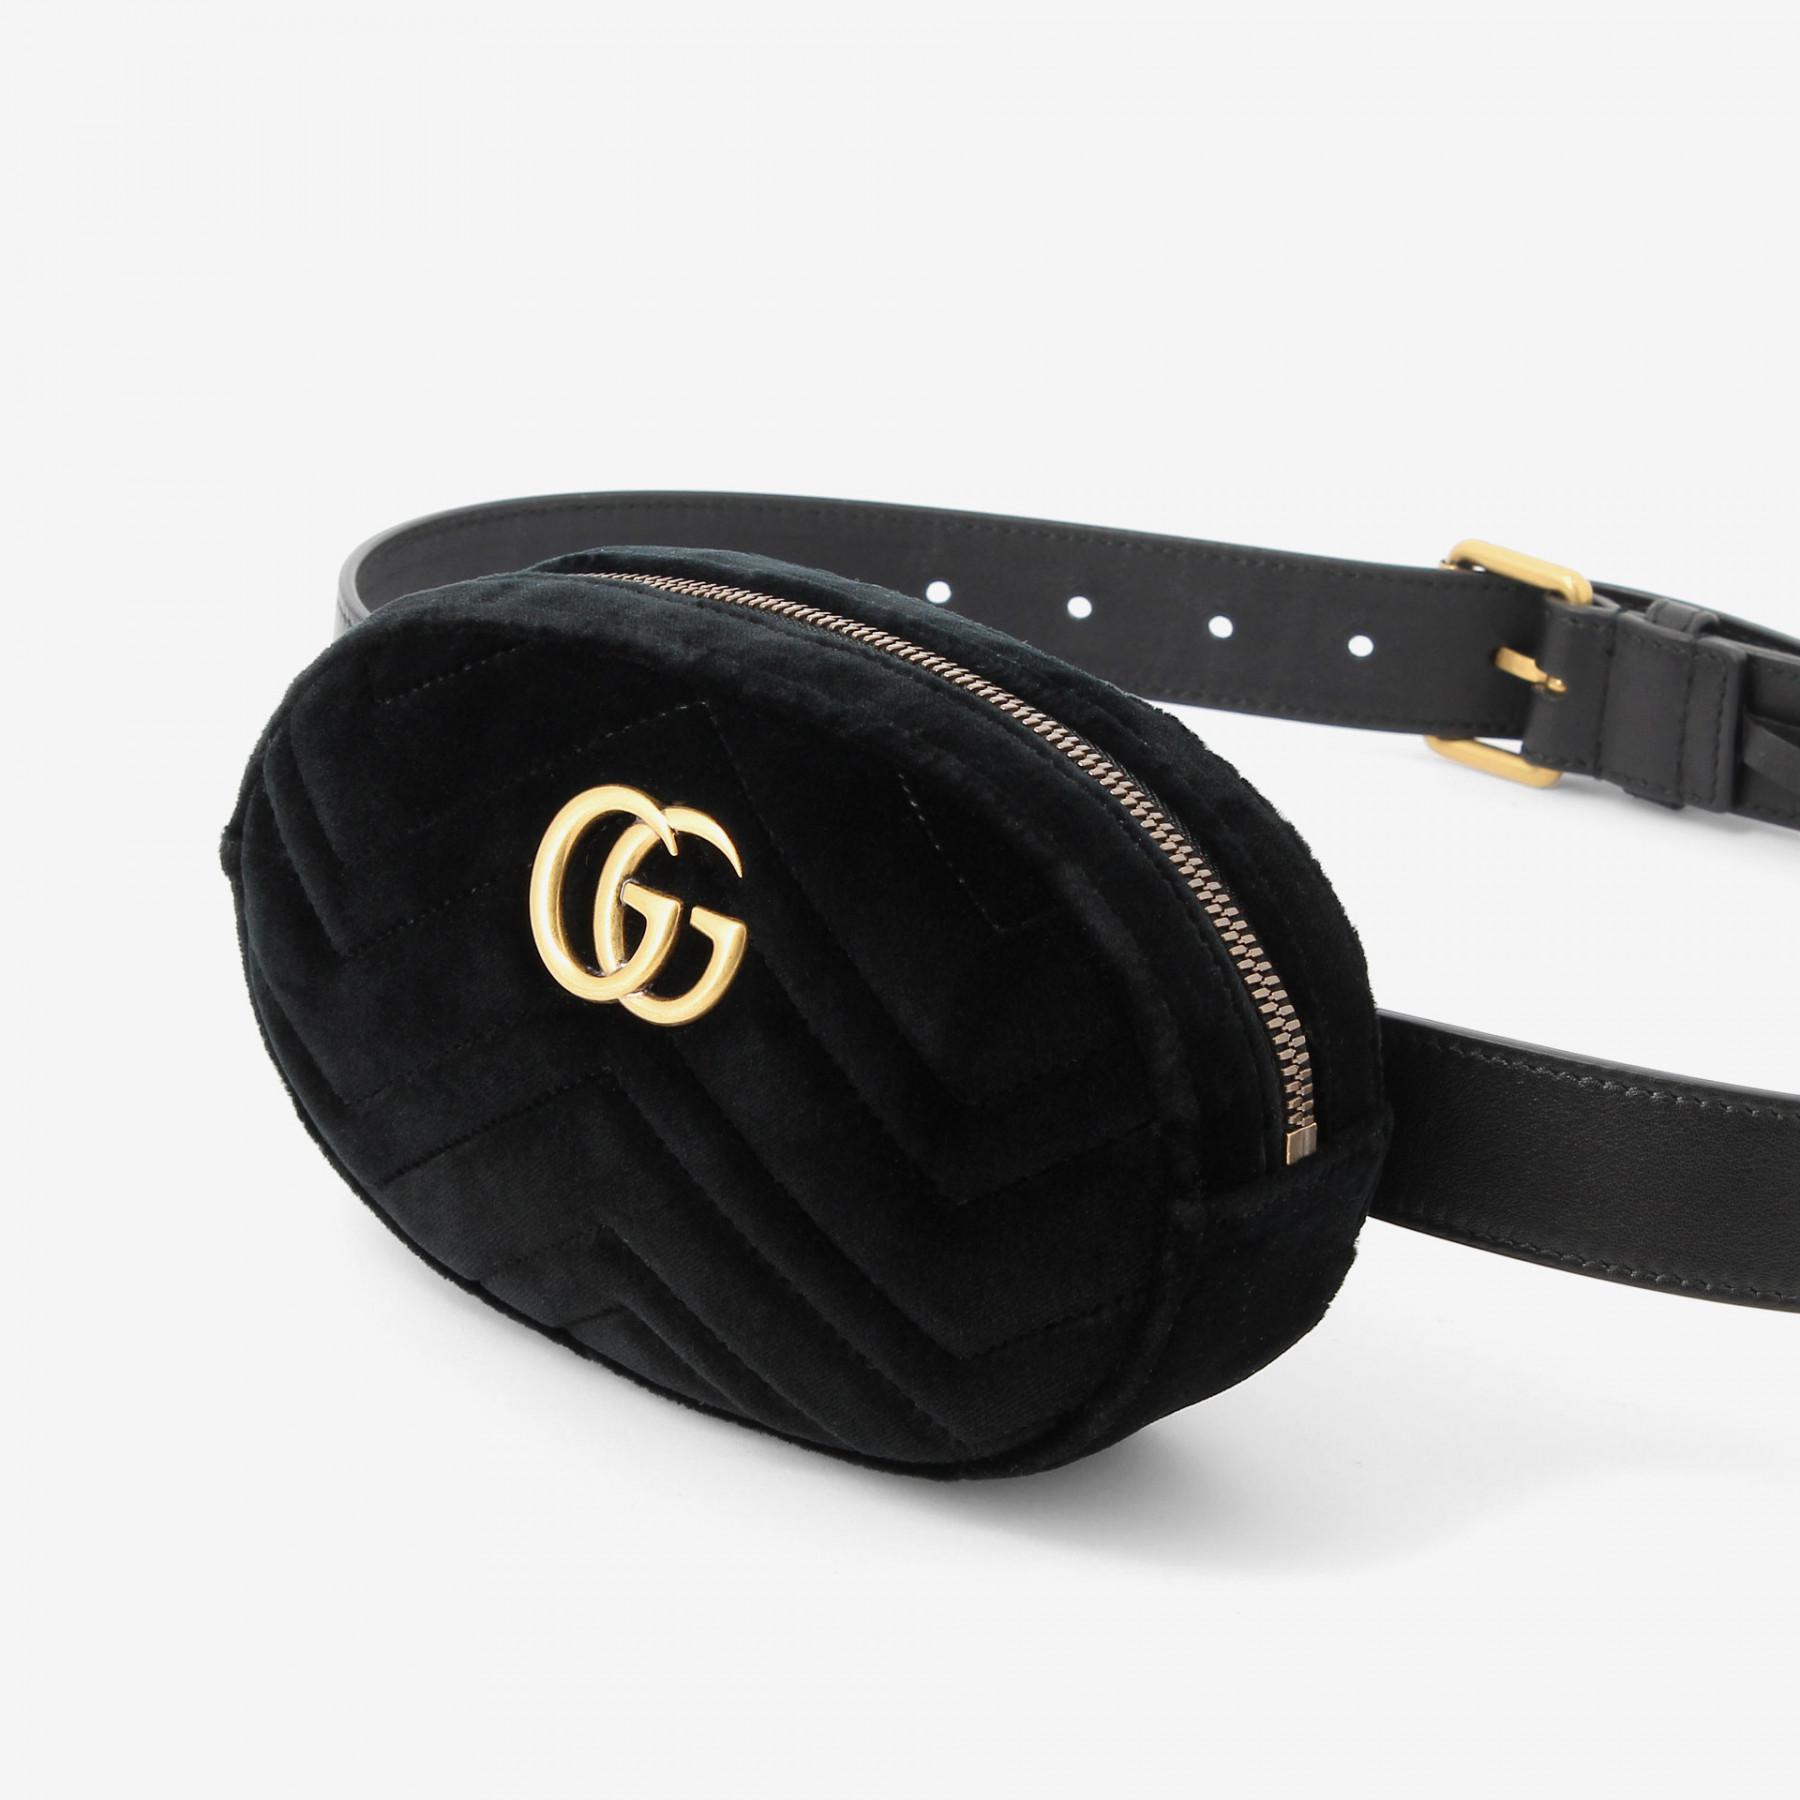 Lyst - Gucci Velvet Marmont Belt Bag in Black